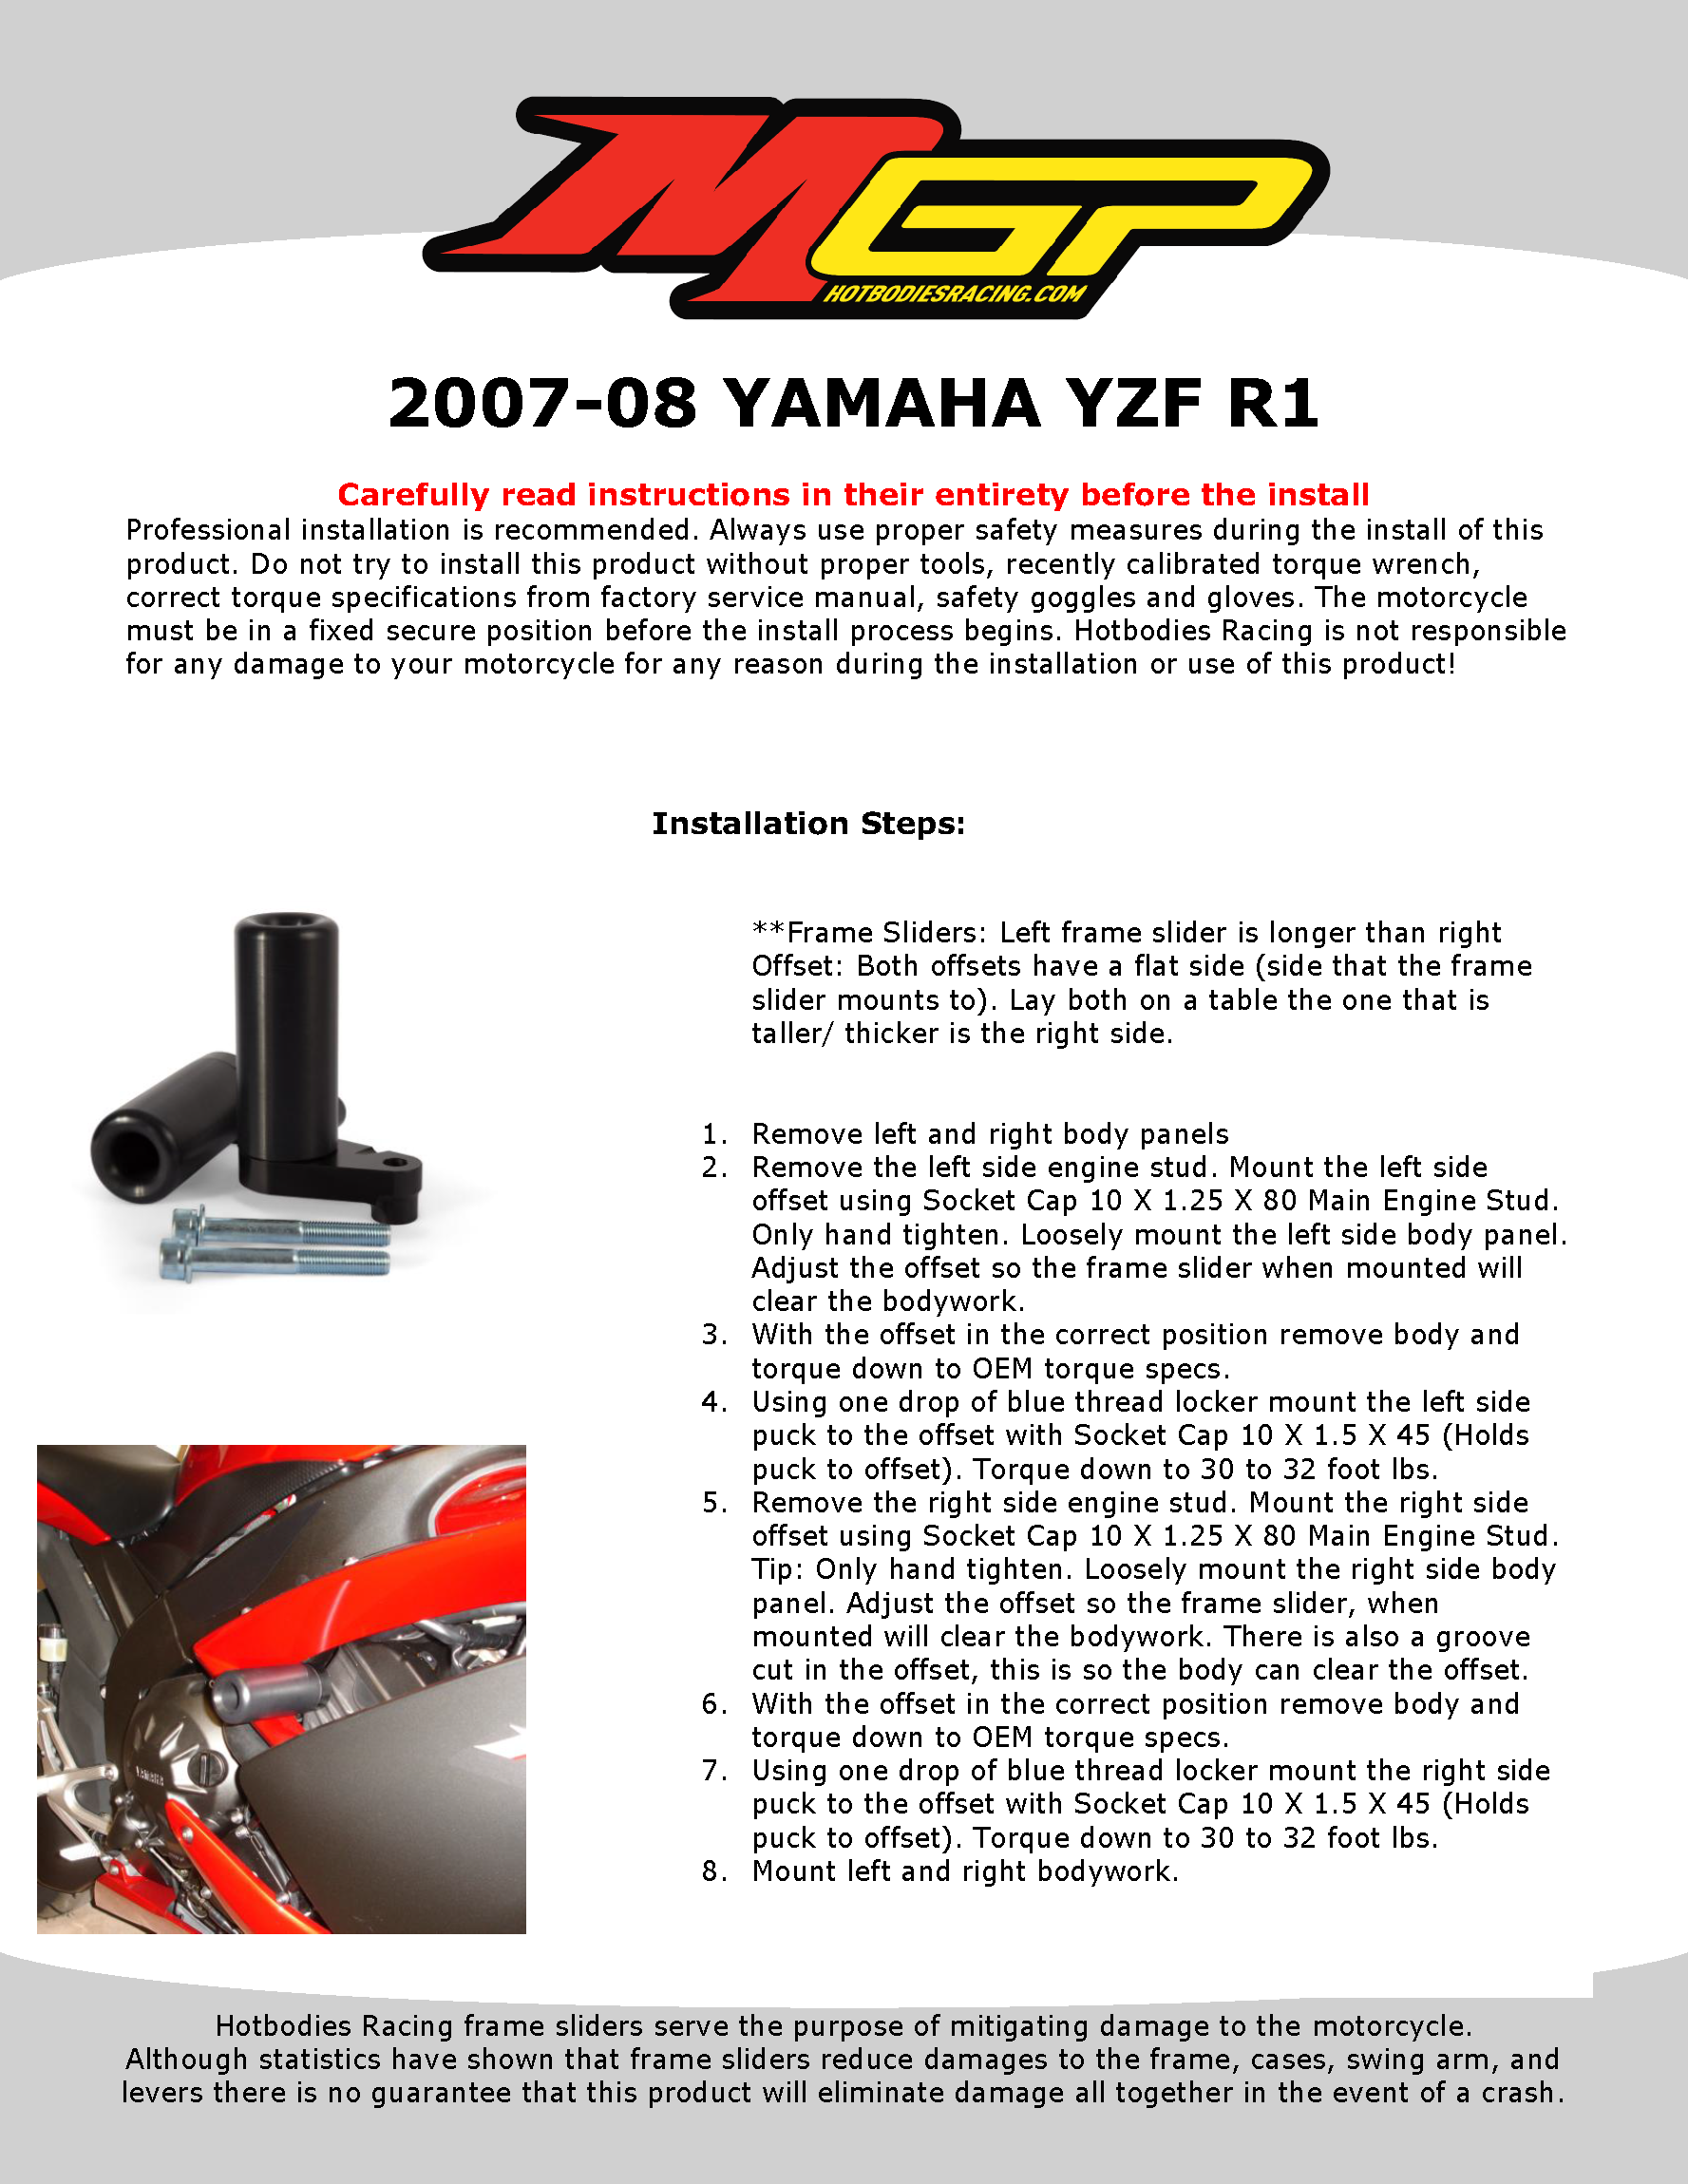 

2007-08 YAMAHA YZF R1 Frame Sliders Installation

